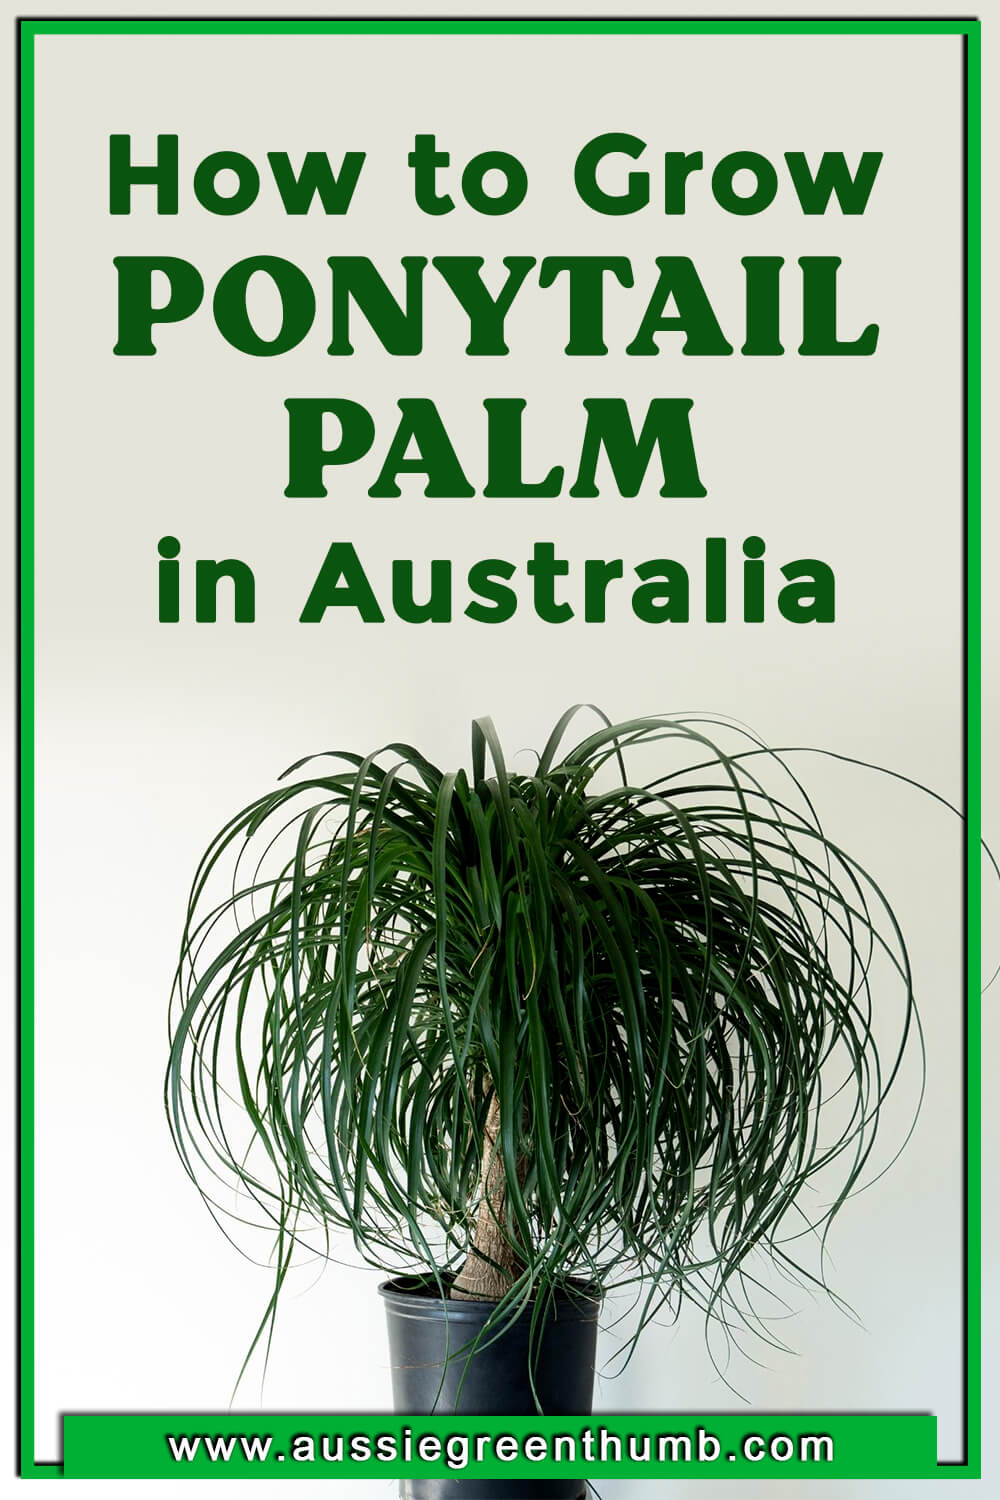 How to Grow Ponytail Palm in Australia